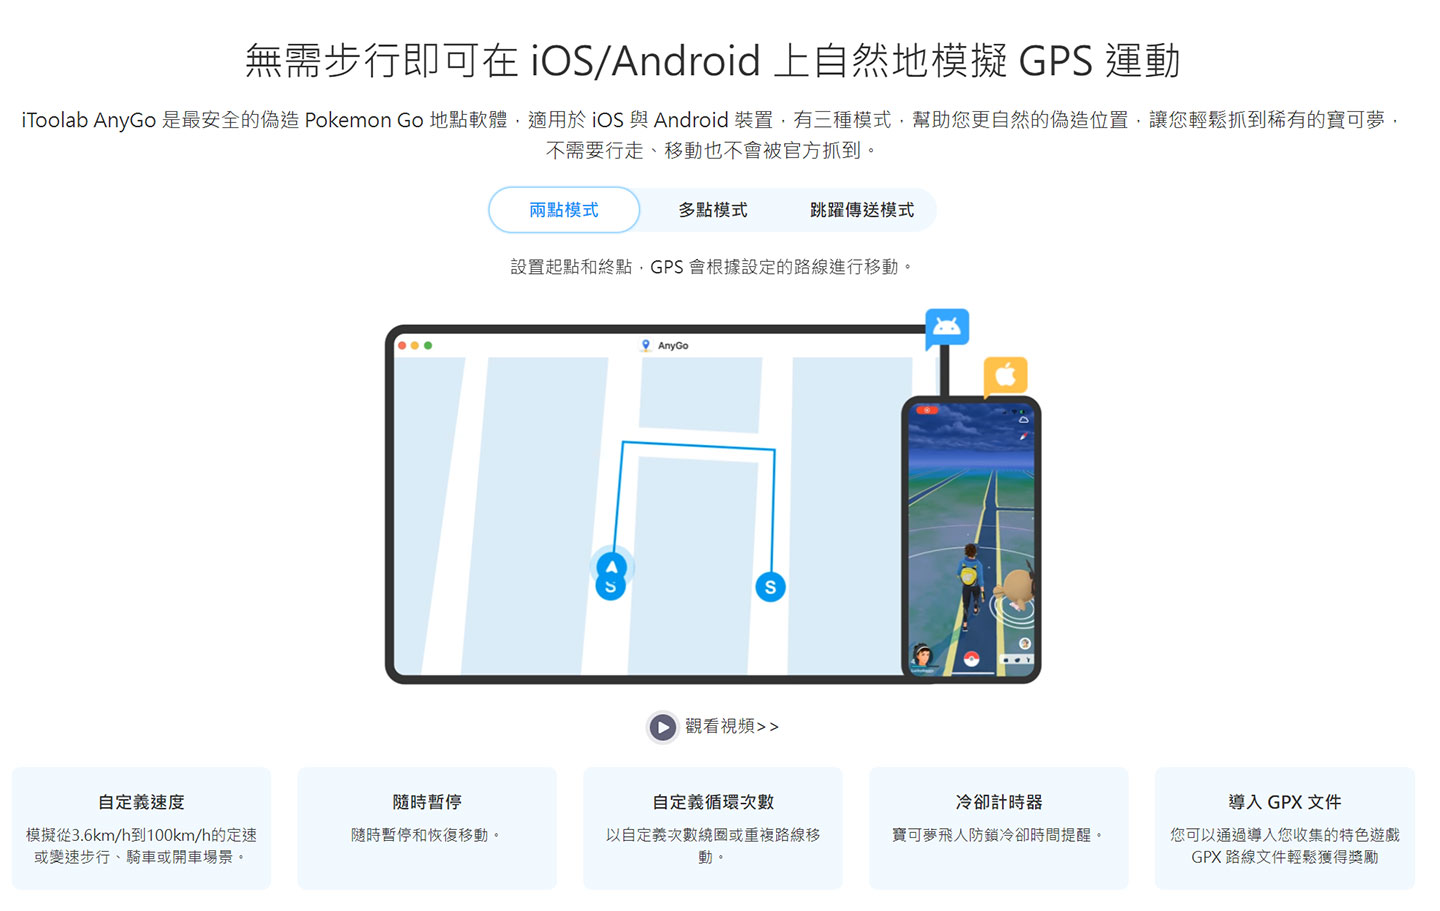 iToolab AnyGo 是一款可以支援 iOS 與 Android 裝置的 GPS 定位模擬工具，許多功能可說是為《寶可夢 GO》量身打造呢！